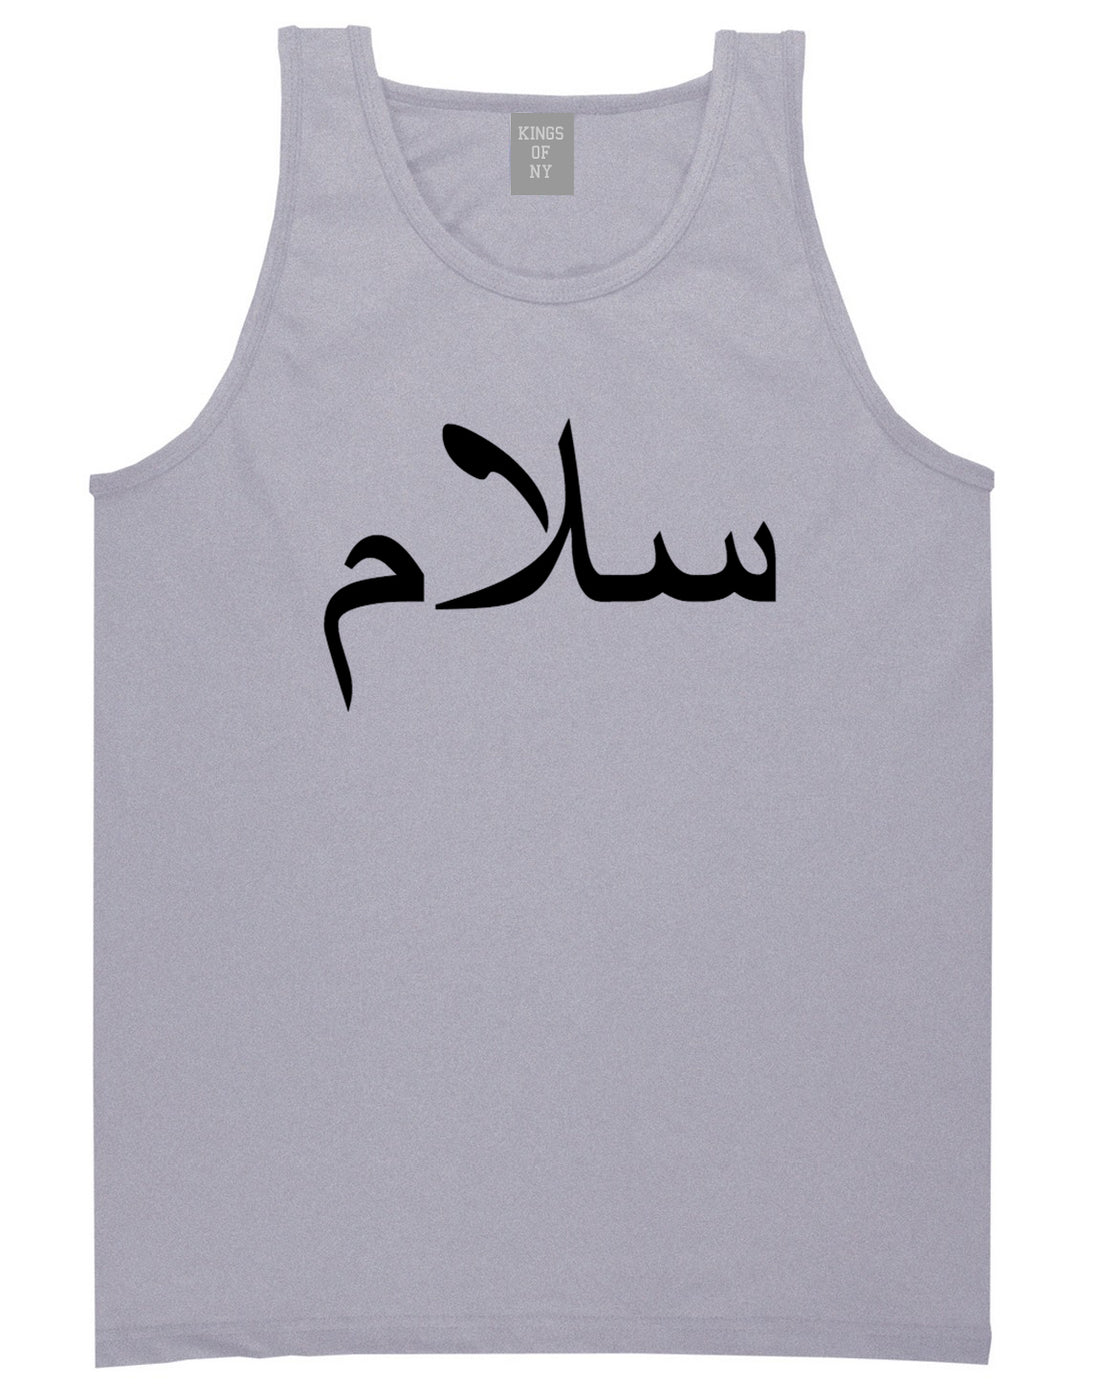 Arabic Peace Salam Grey Tank Top Shirt by Kings Of NY